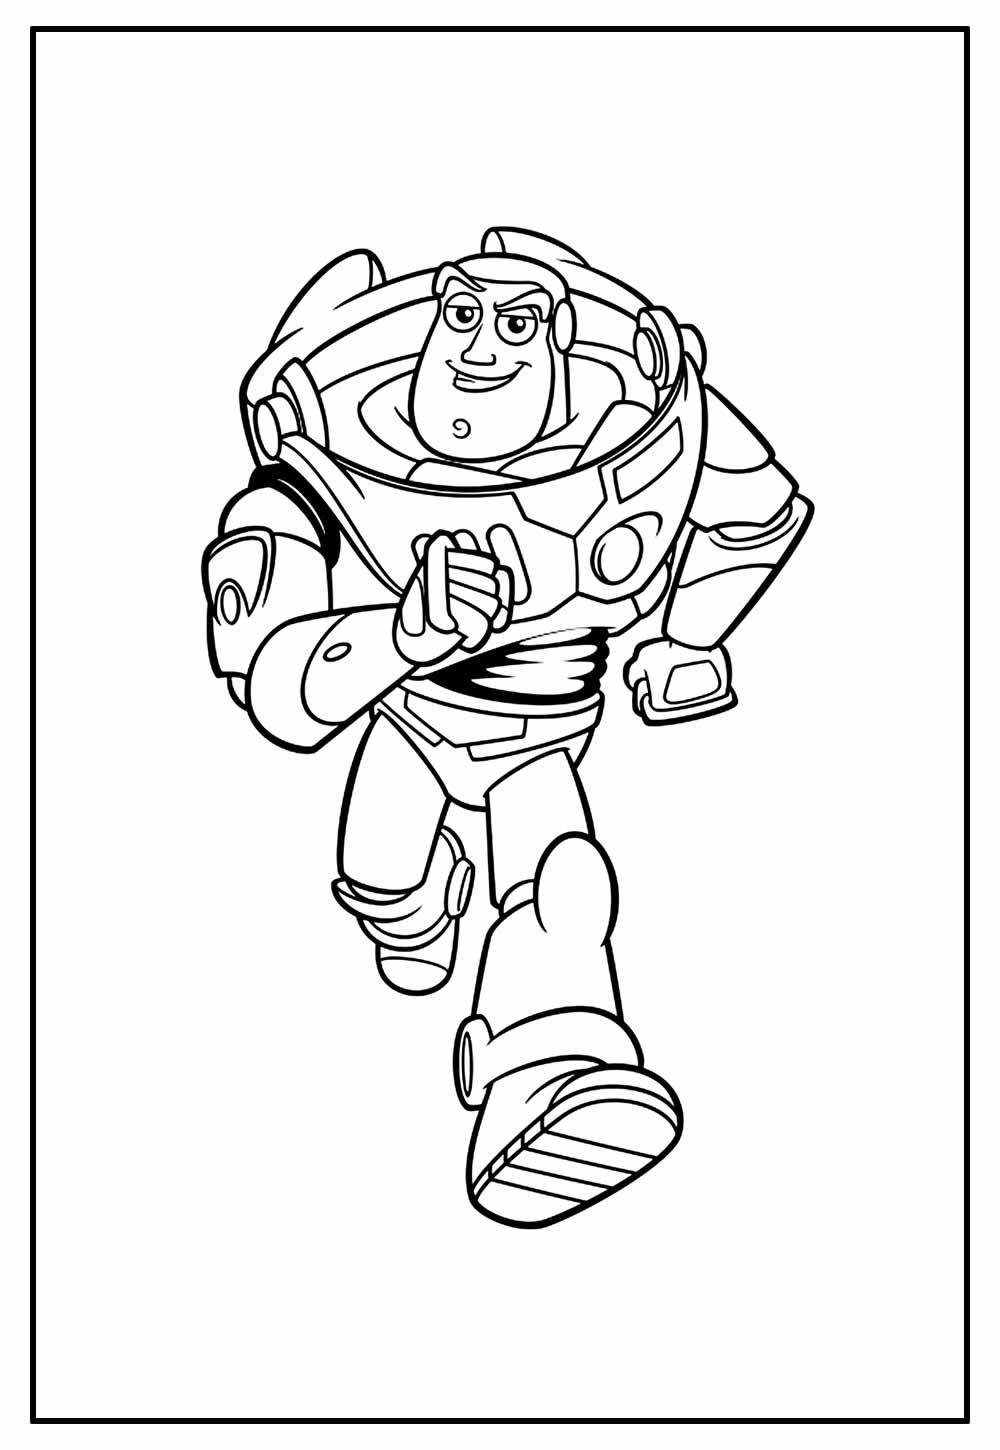 Desenho de Buzz Lightyear